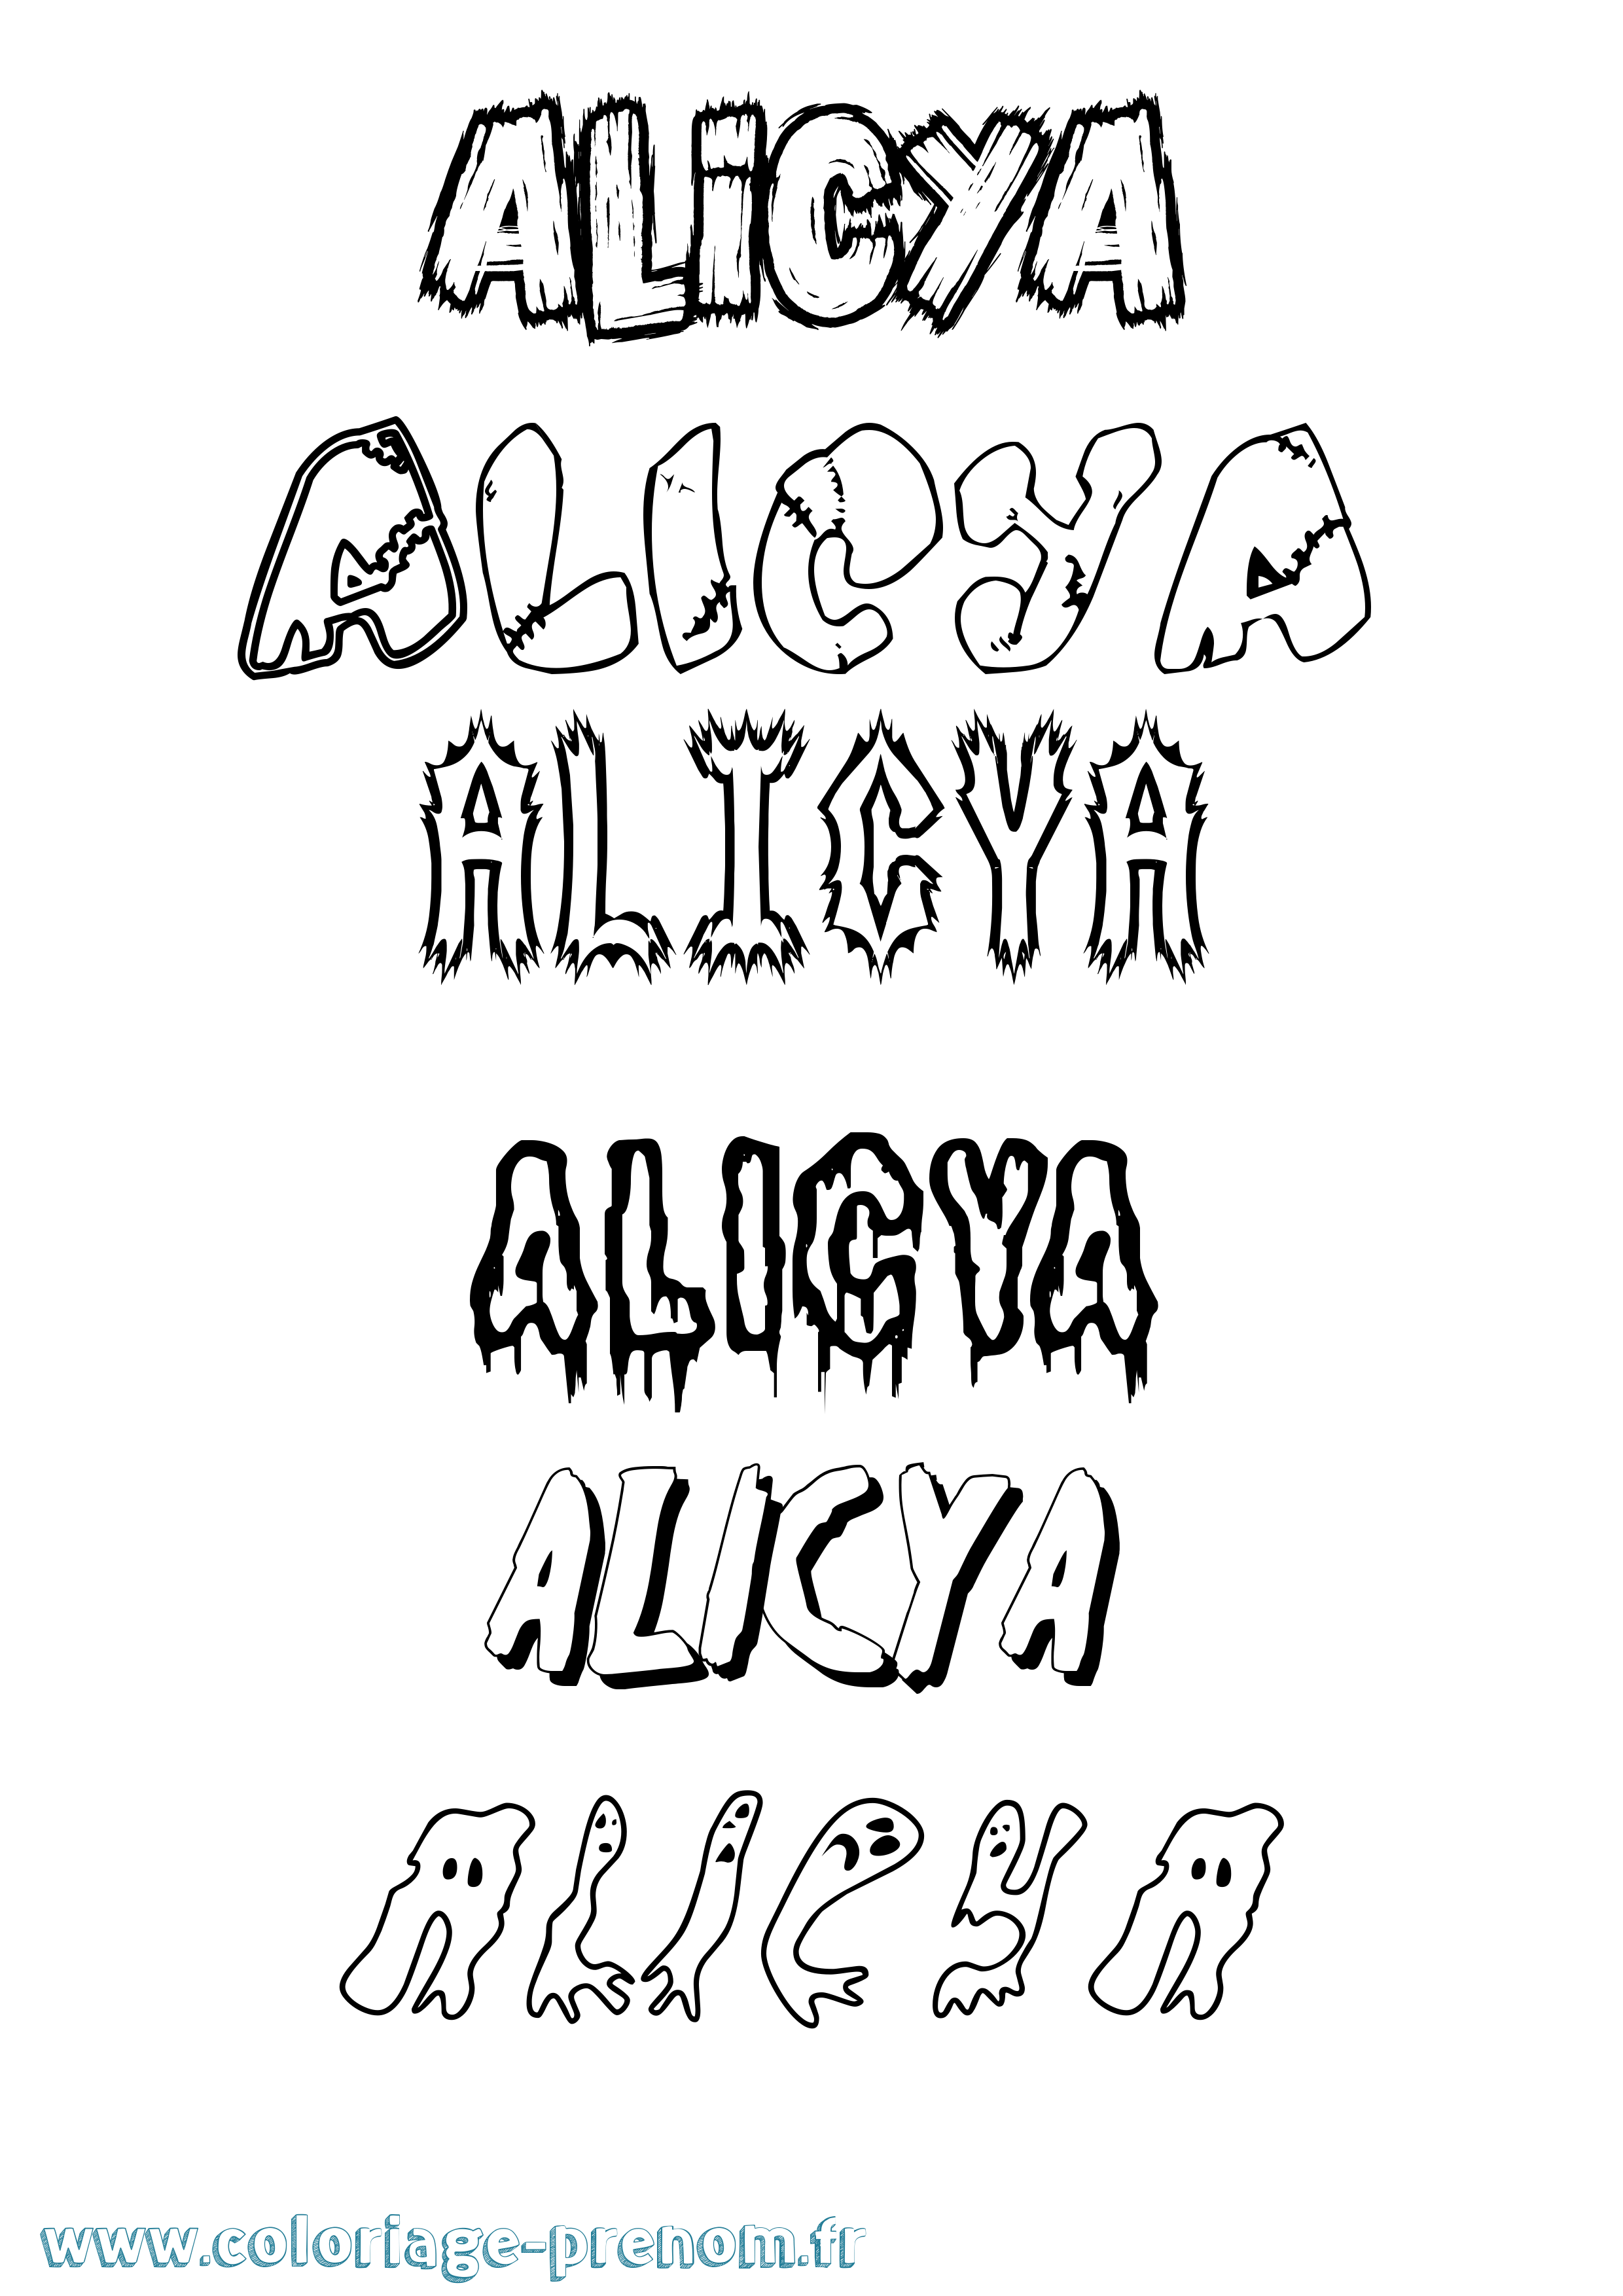 Coloriage prénom Alicya Frisson